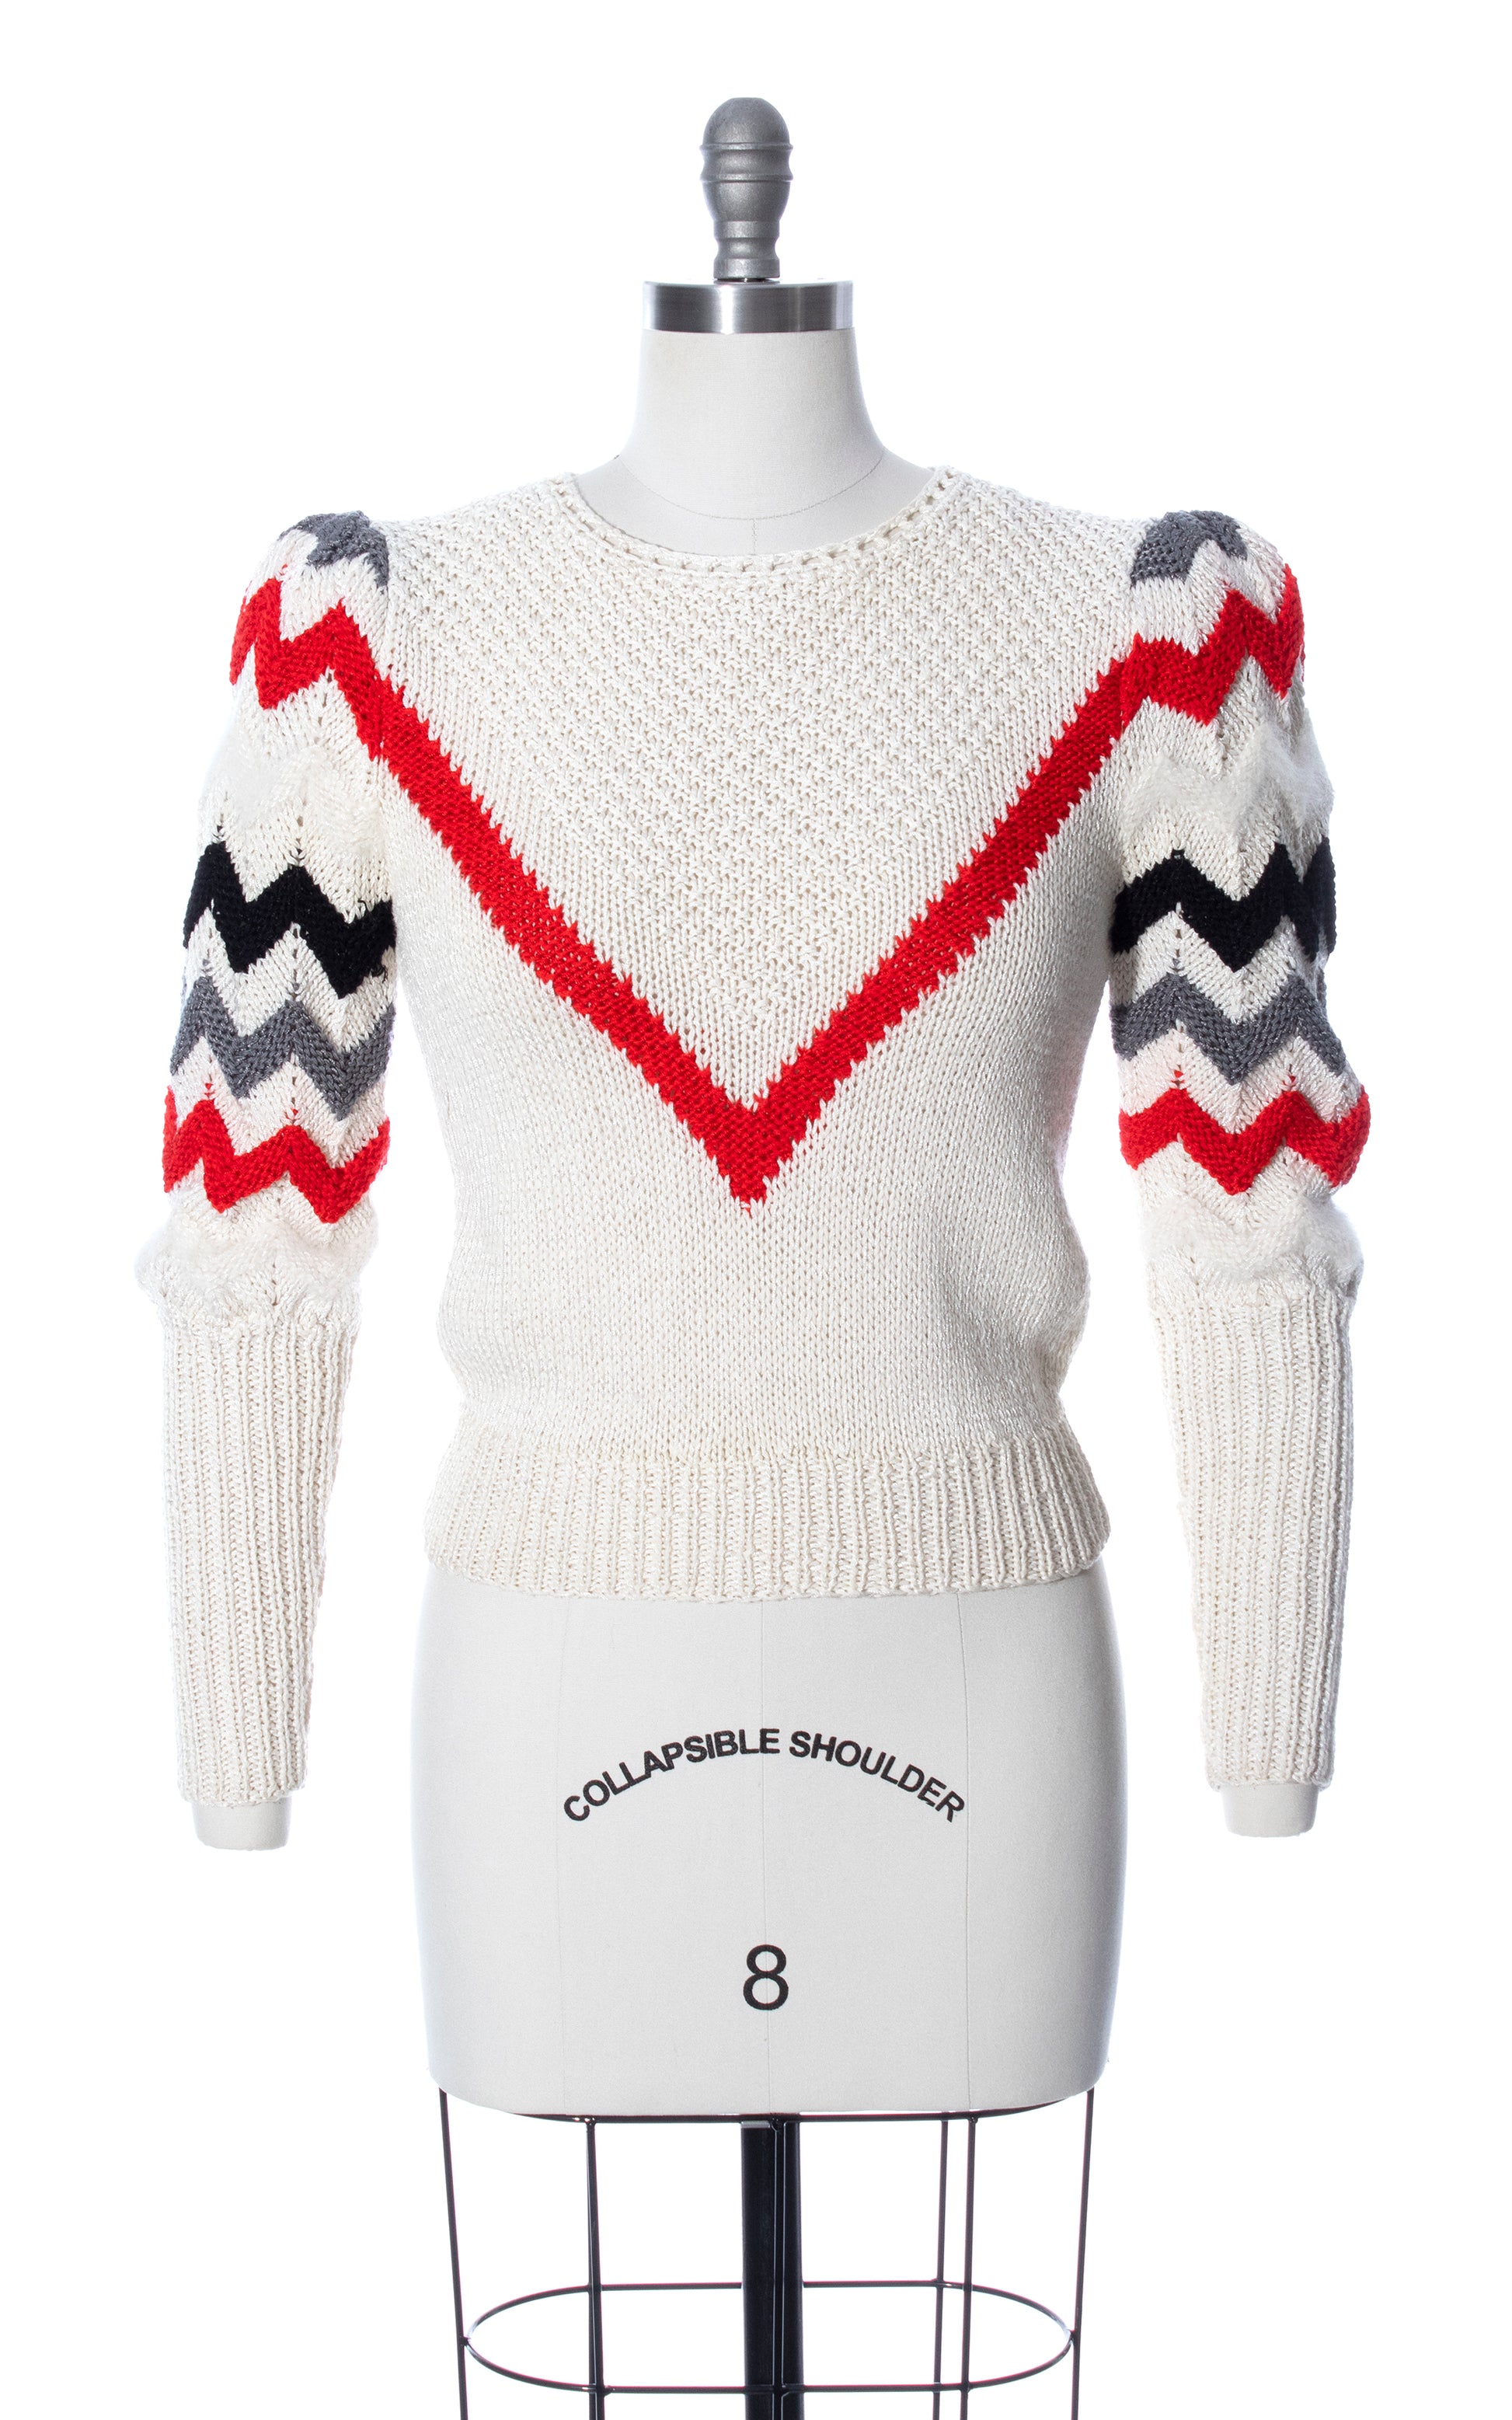 Vintage 80s 1980s Chevron Striped Knit Rayon Angora White Puff Mutton Sleeve Sweater Birthday Life Vintage